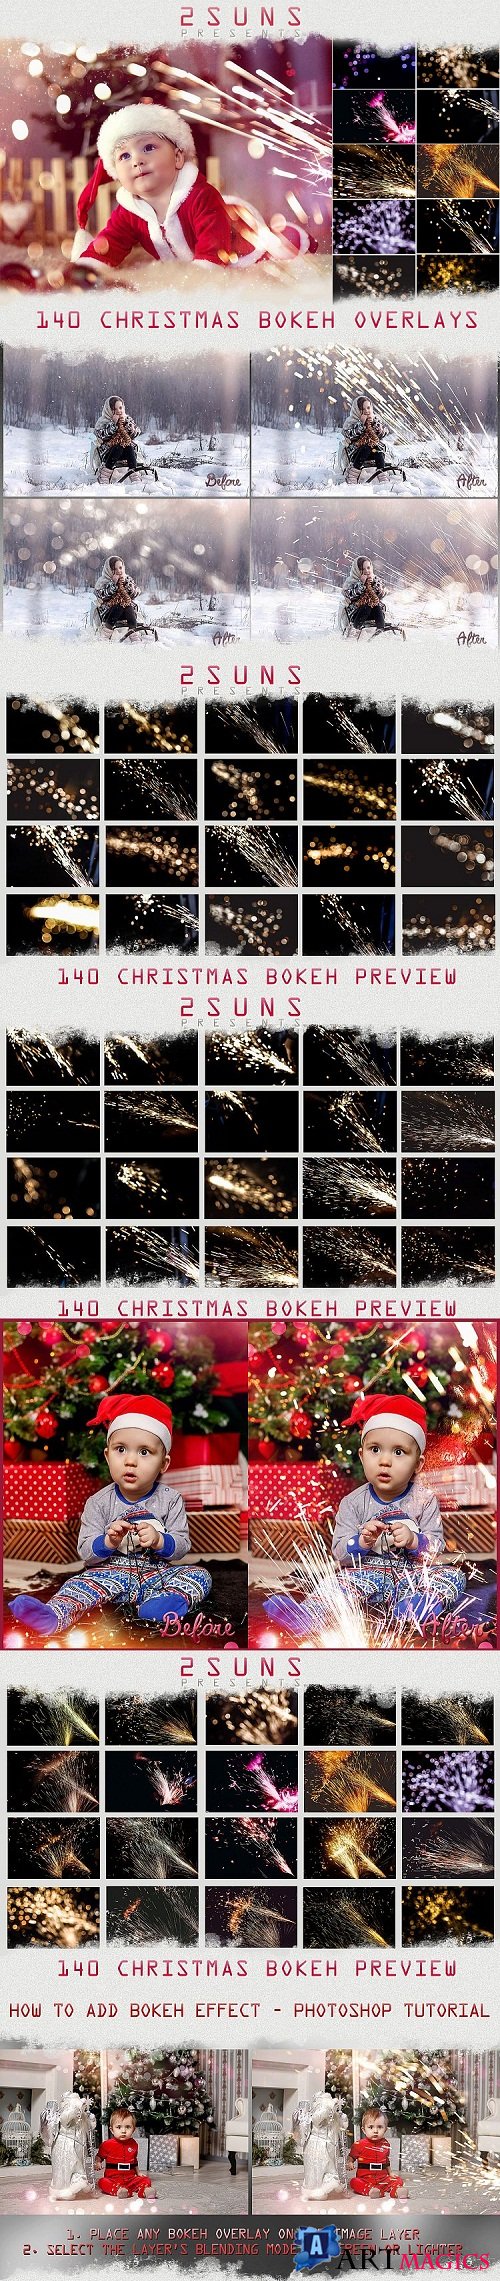 Christmas sparklers Lights, Bokeh photo overlays textures 231211